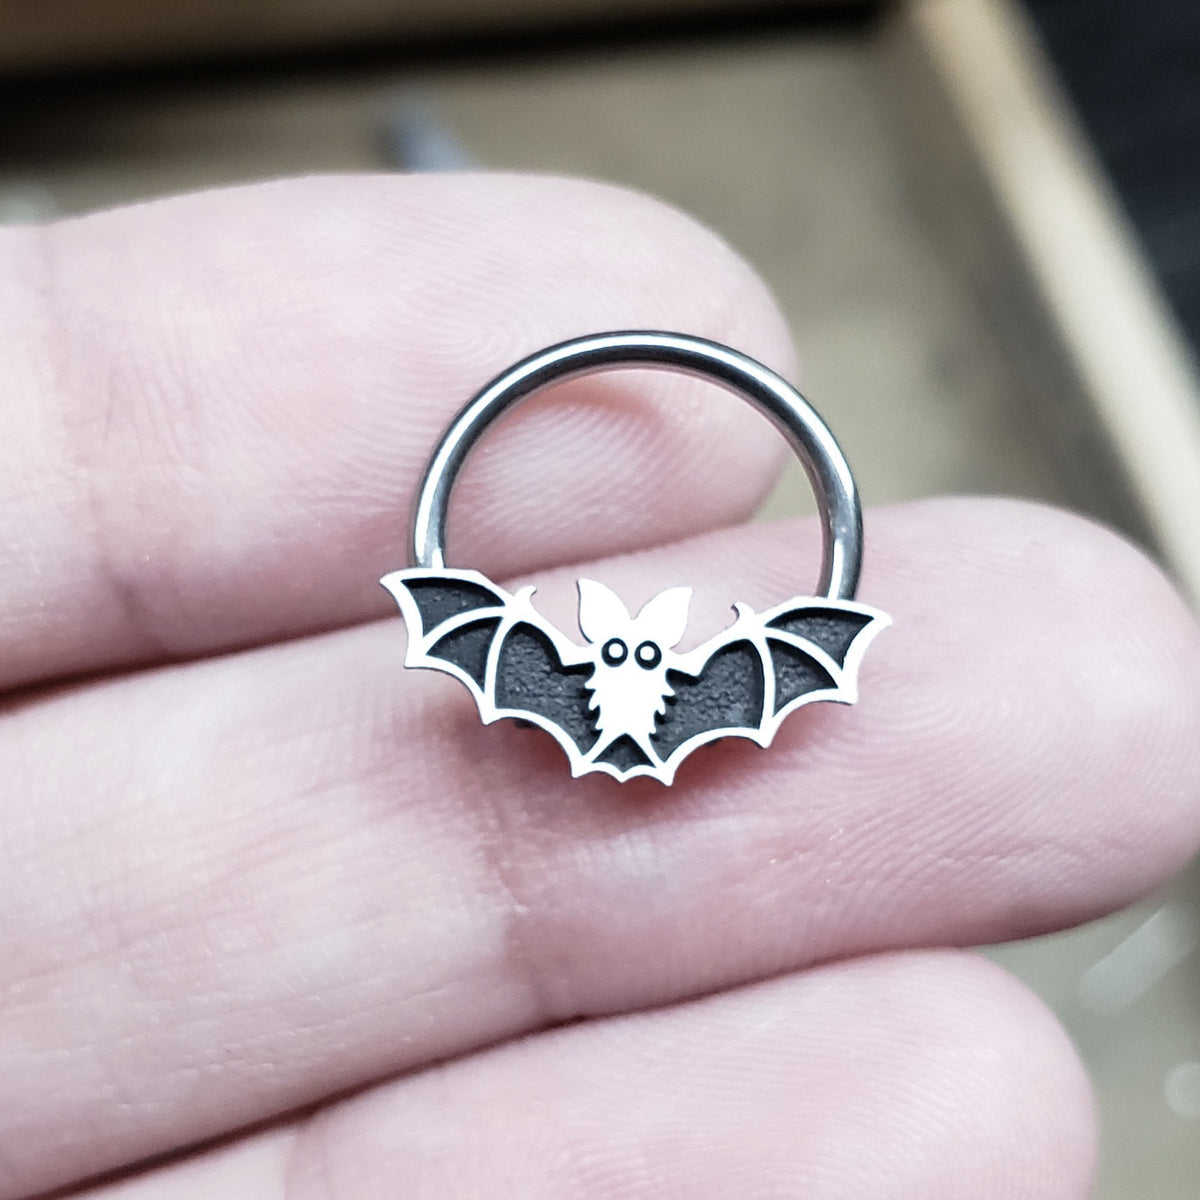 16G Halloween Bat Captive Bead Ring - Metal Lotus